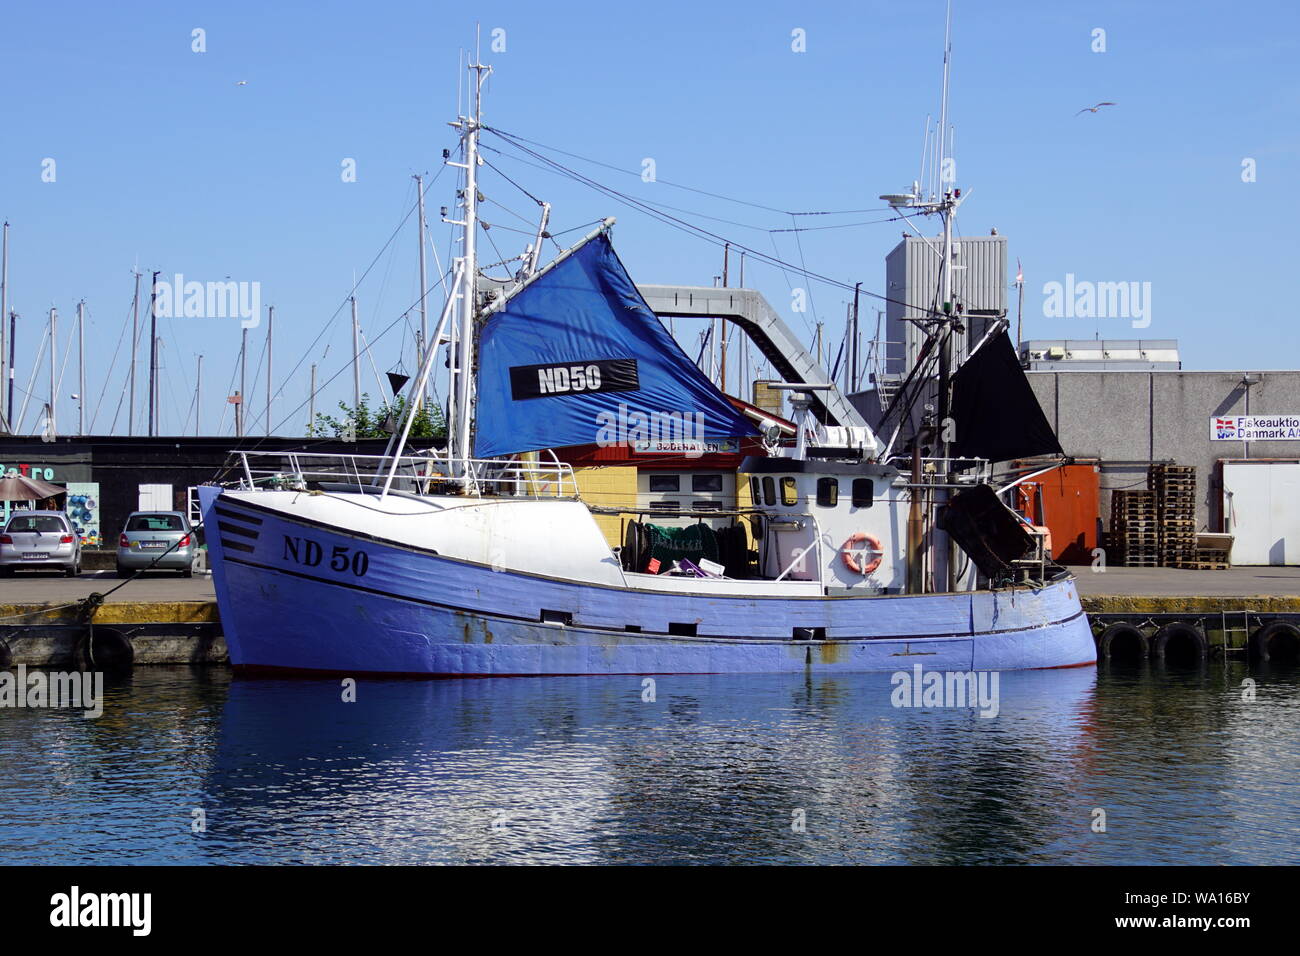 Rodvig, Denmark - July 18, 2019: Fishing boat ND 50 docked in de harbor of Rødvig. Stock Photo